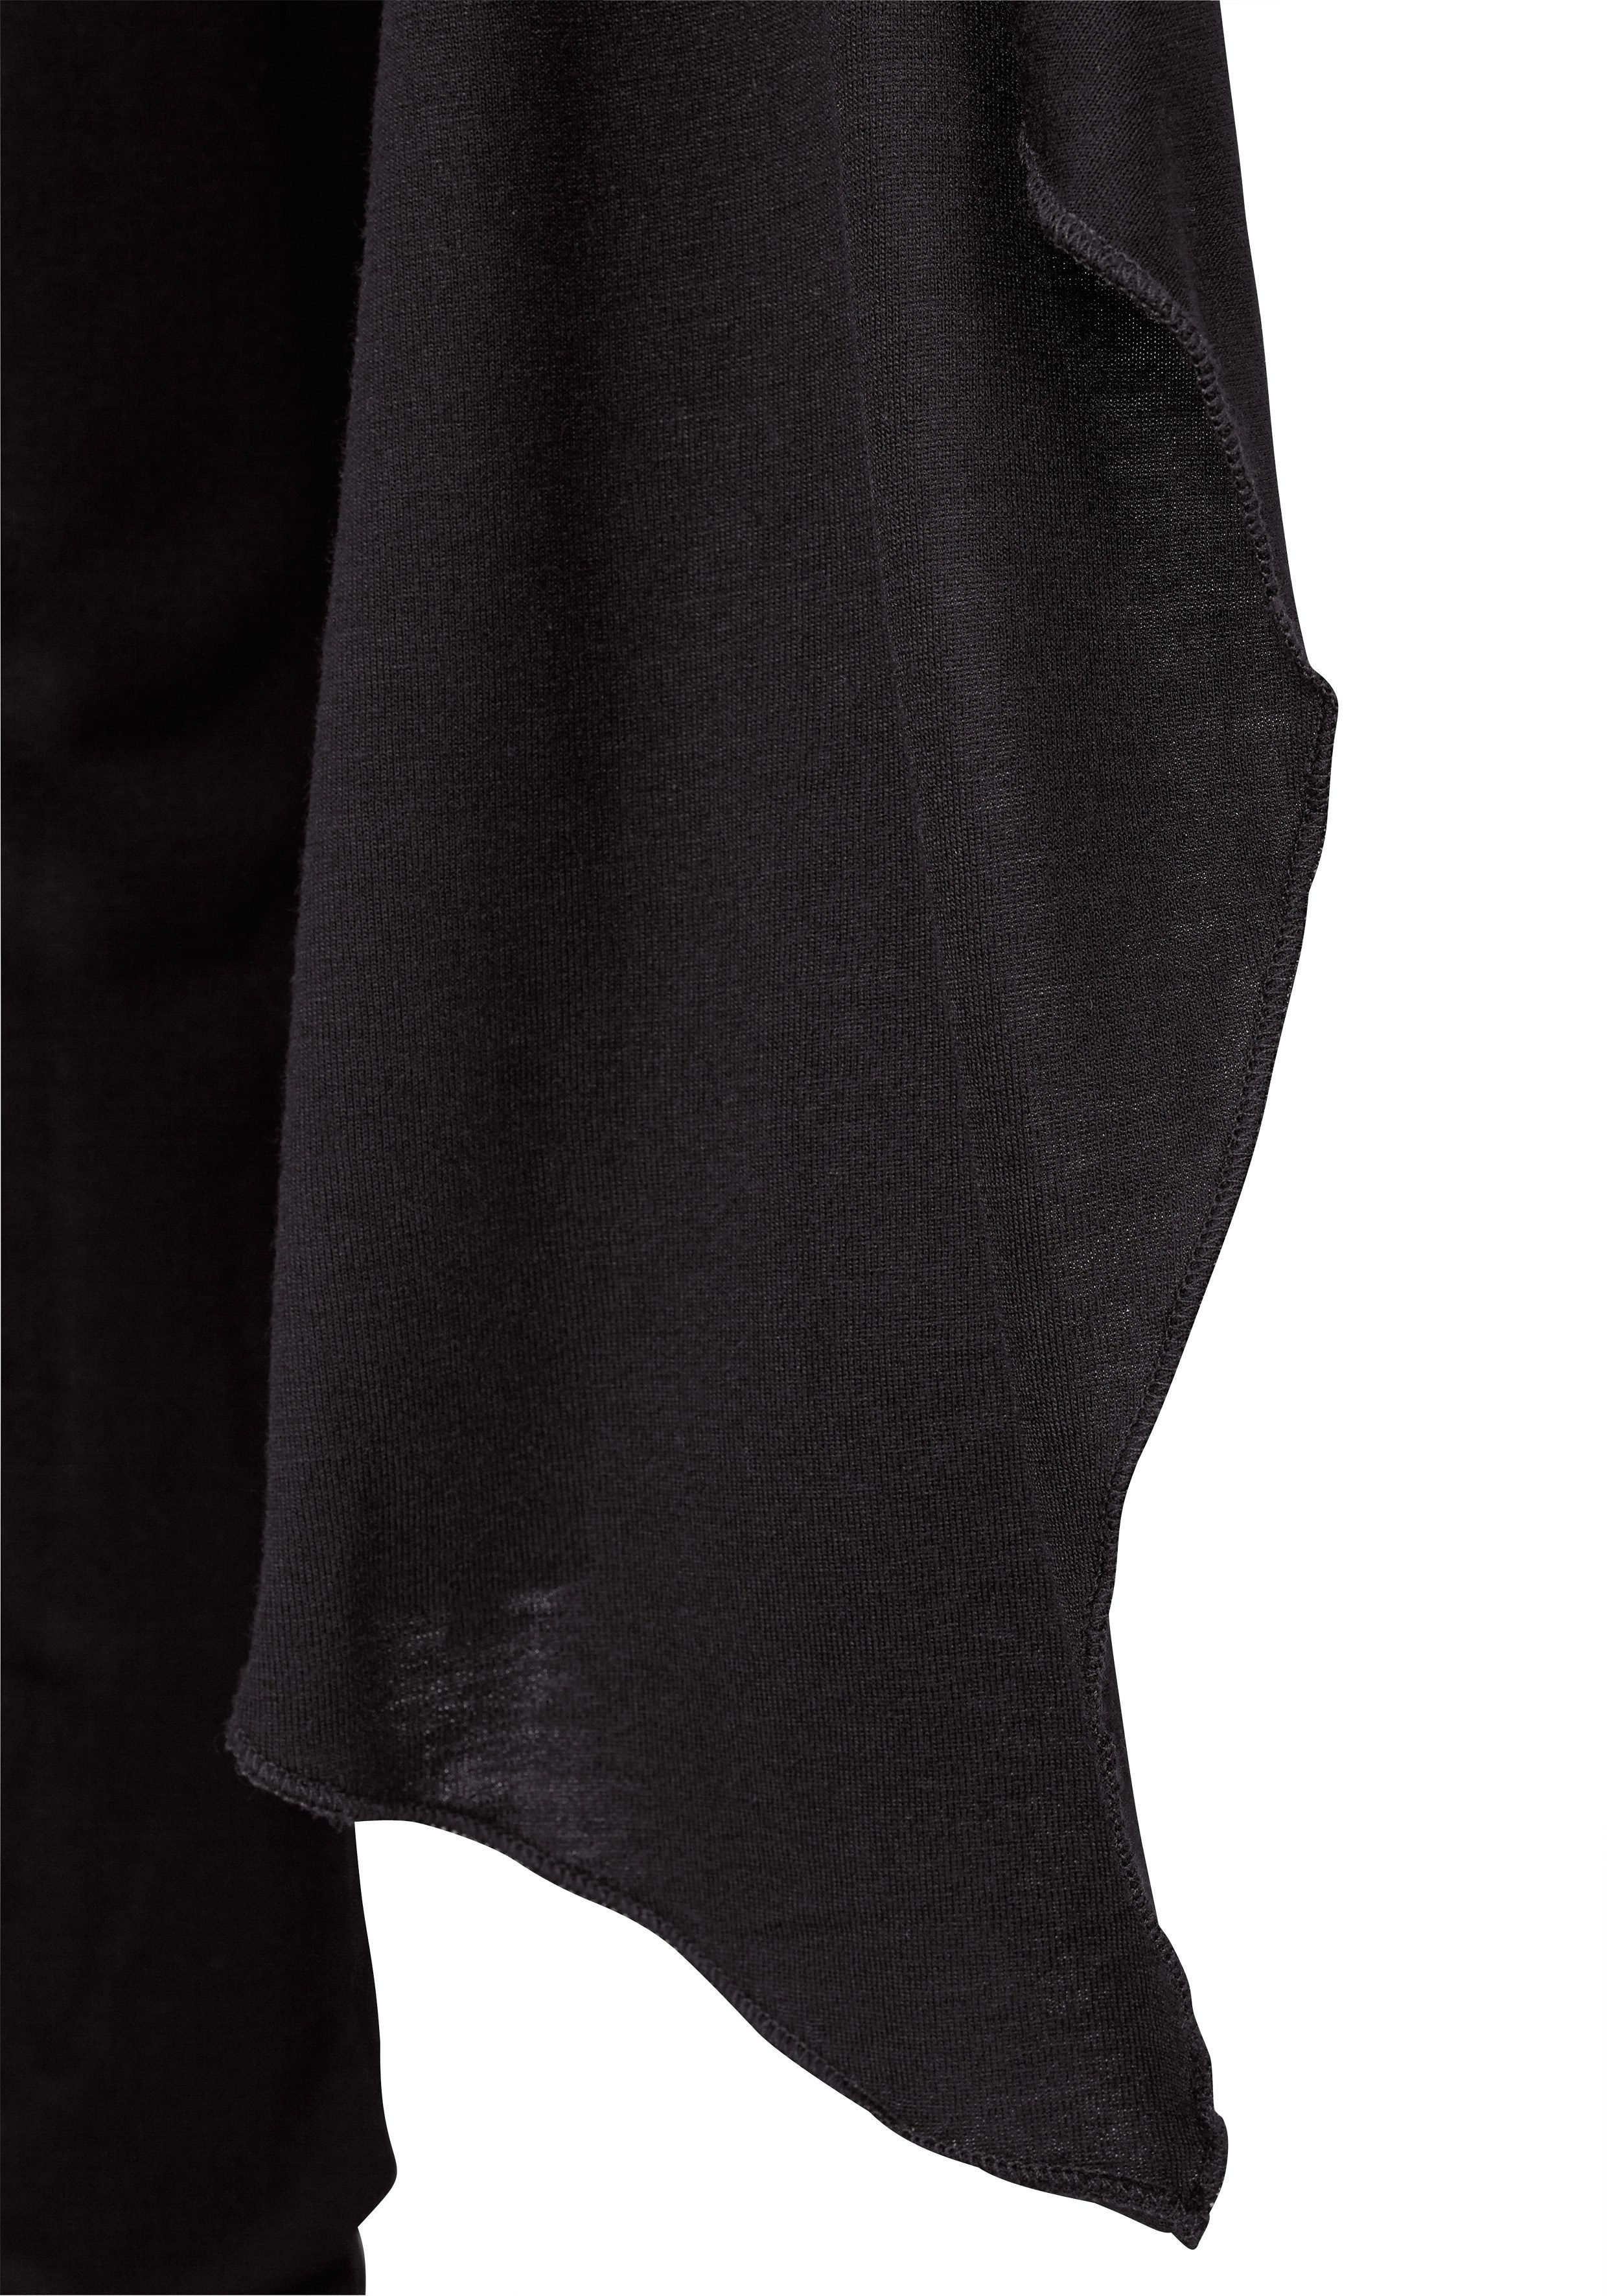 LASCANA Shirtjacke in offener Form schwarz